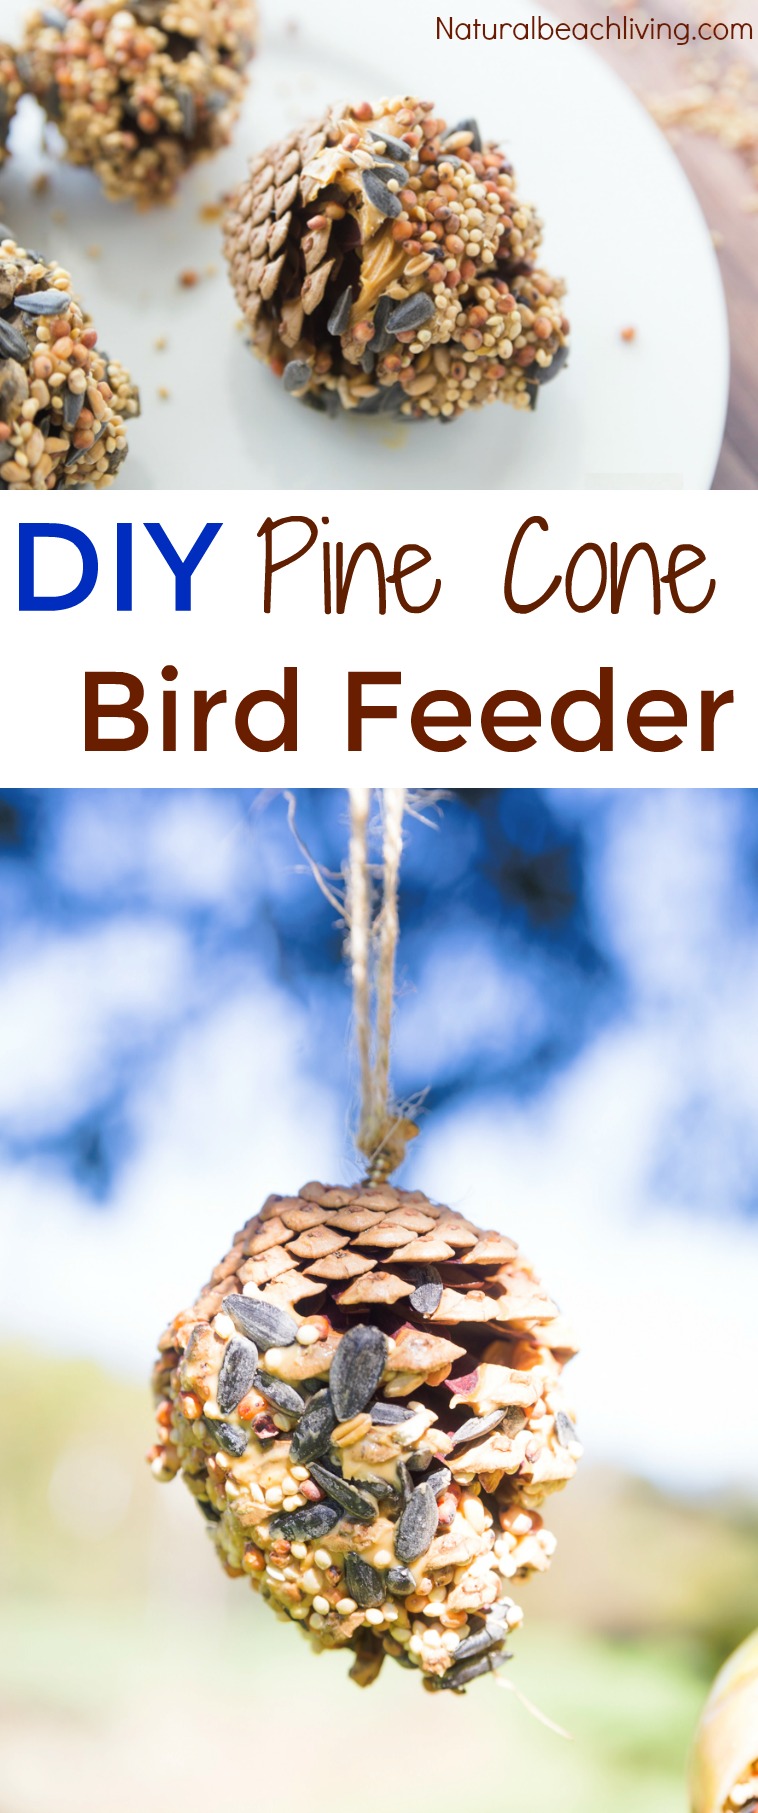 How to Make The Best Pine Cone Bird Feeder